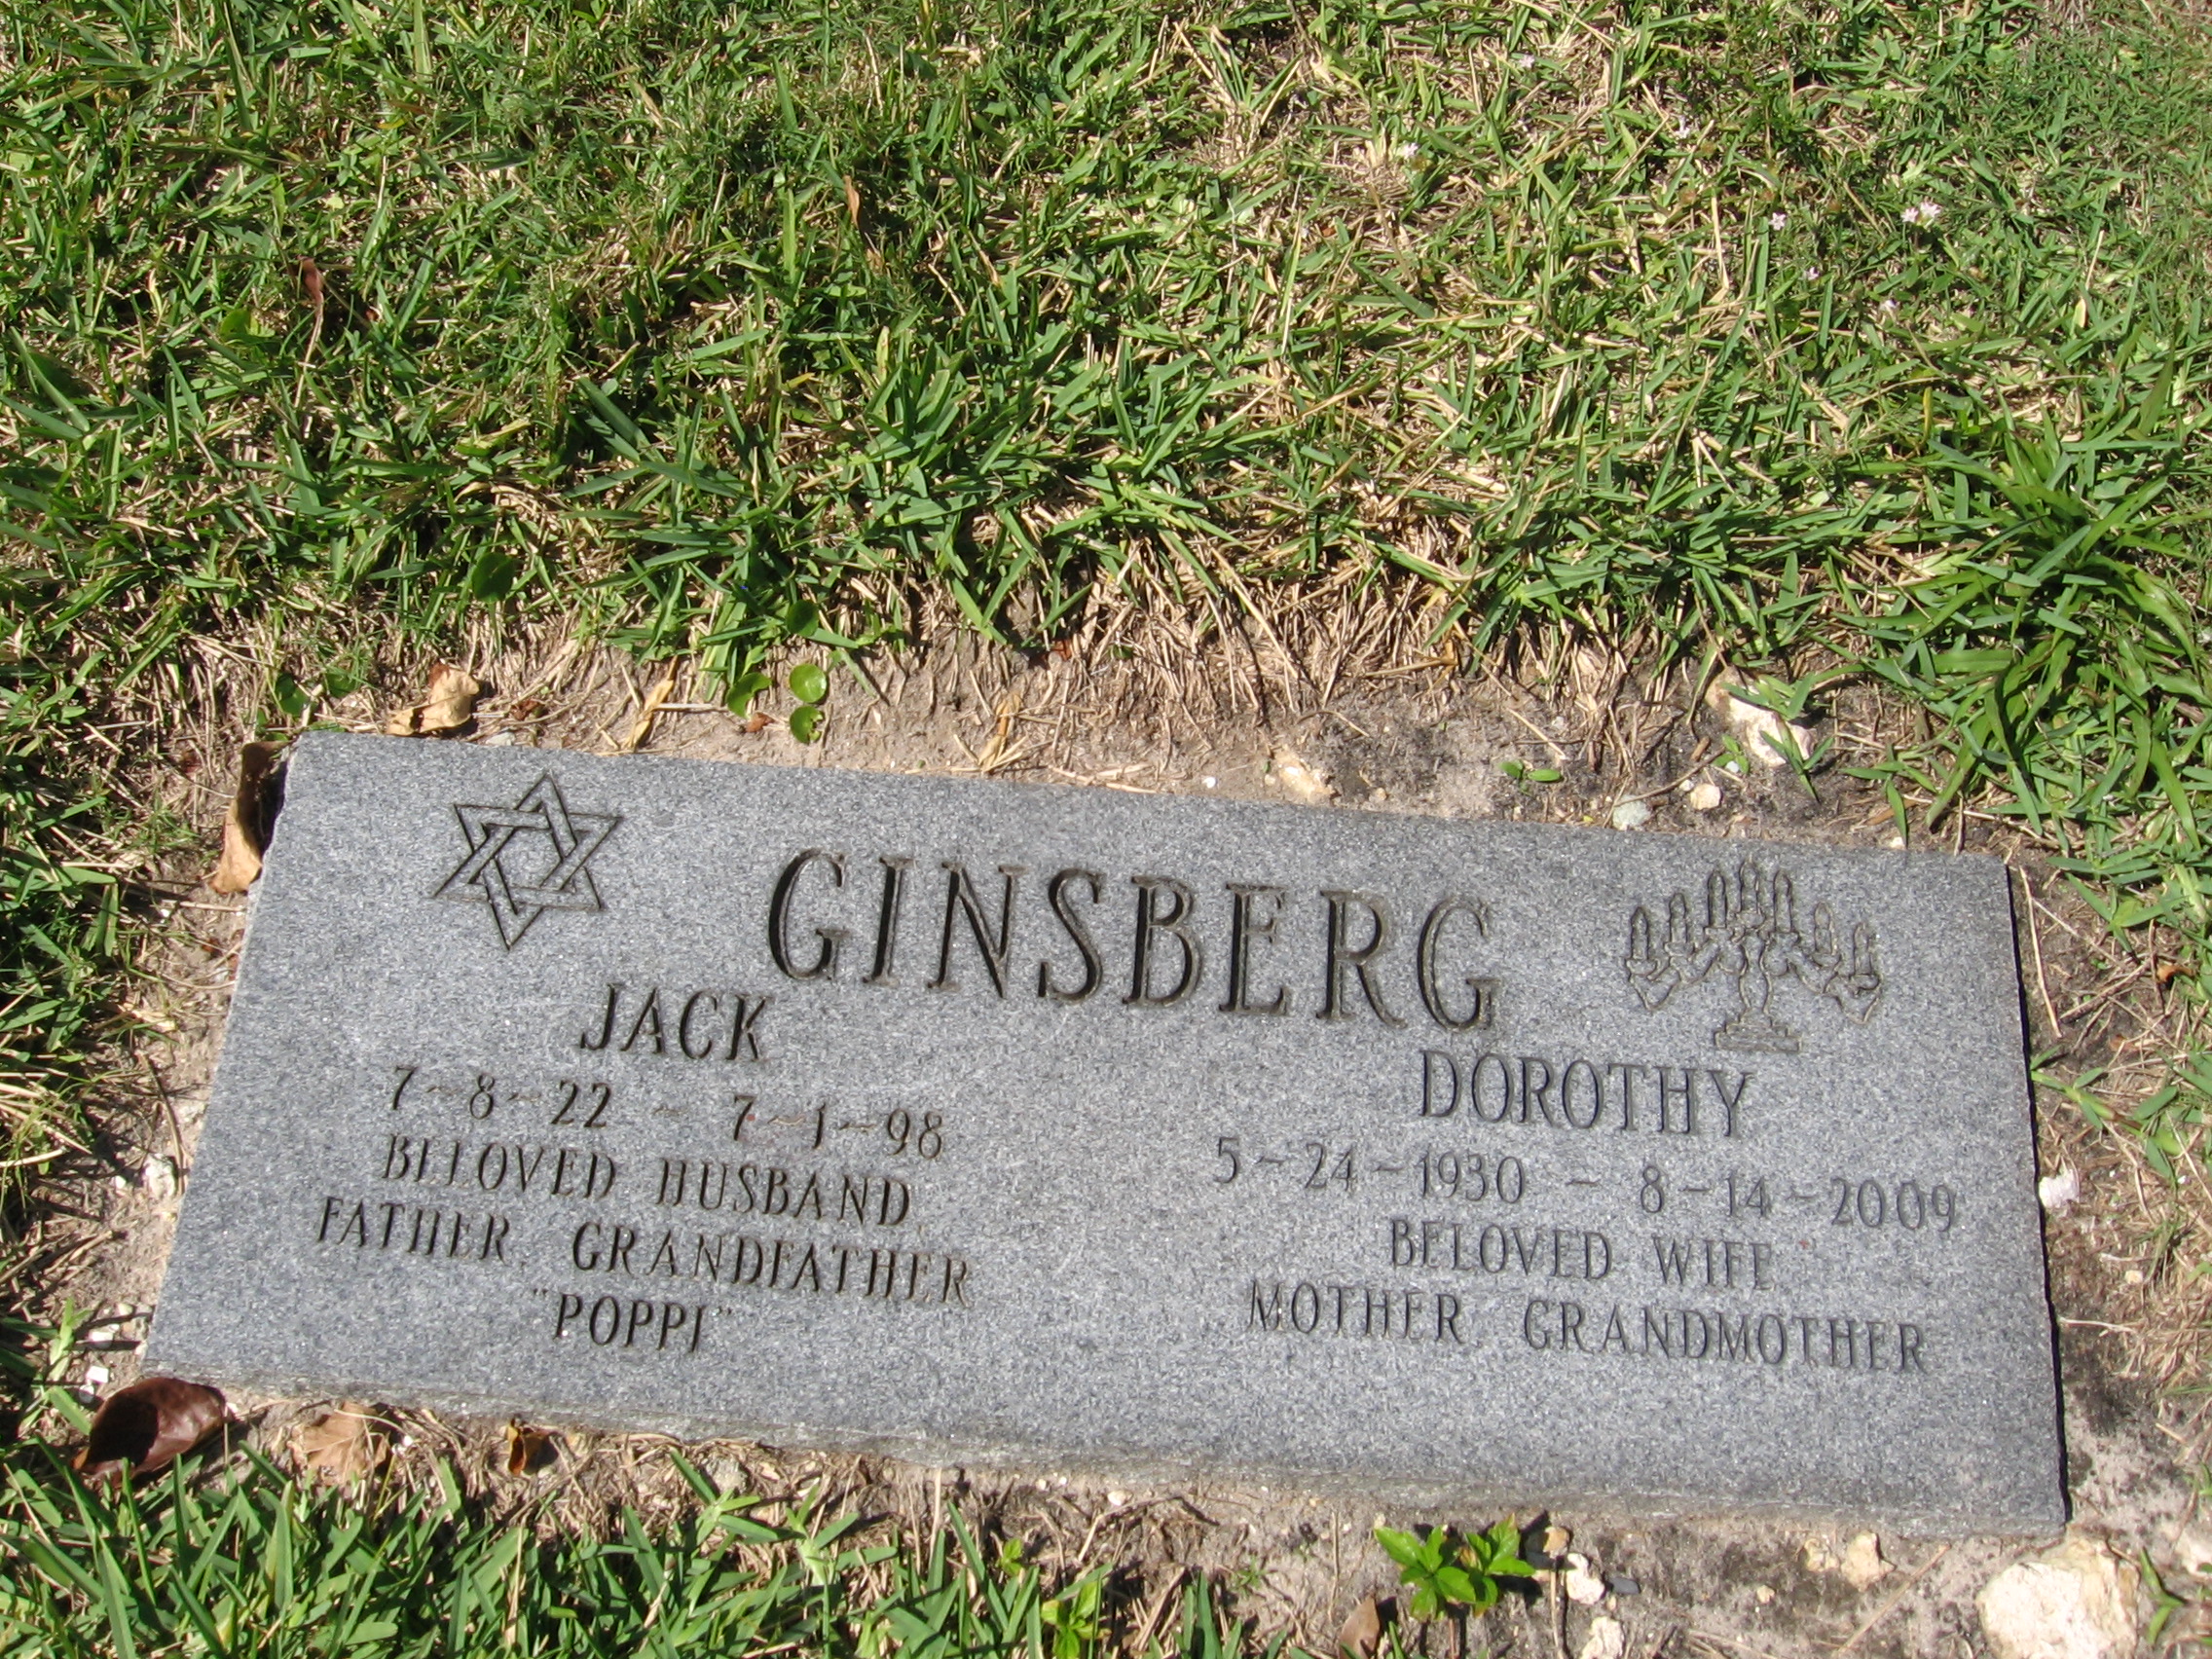 Jack Ginsberg